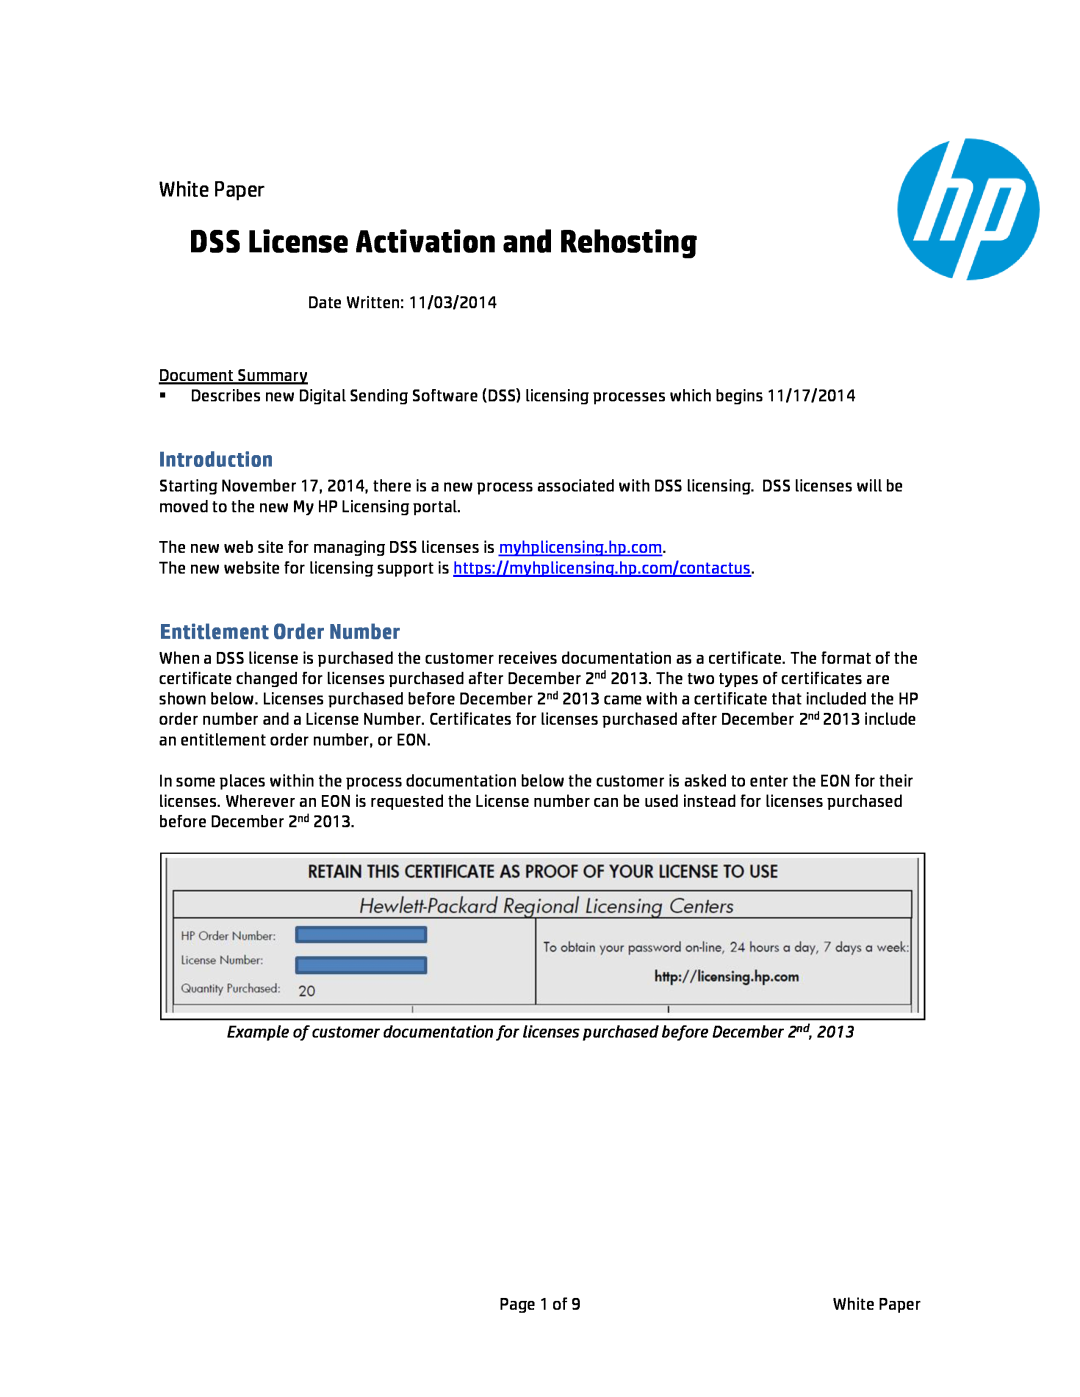 HP MFP Sending Software 4.25 manual Introduction, Entitlement Order Number, DSS License Activation and Rehosting 